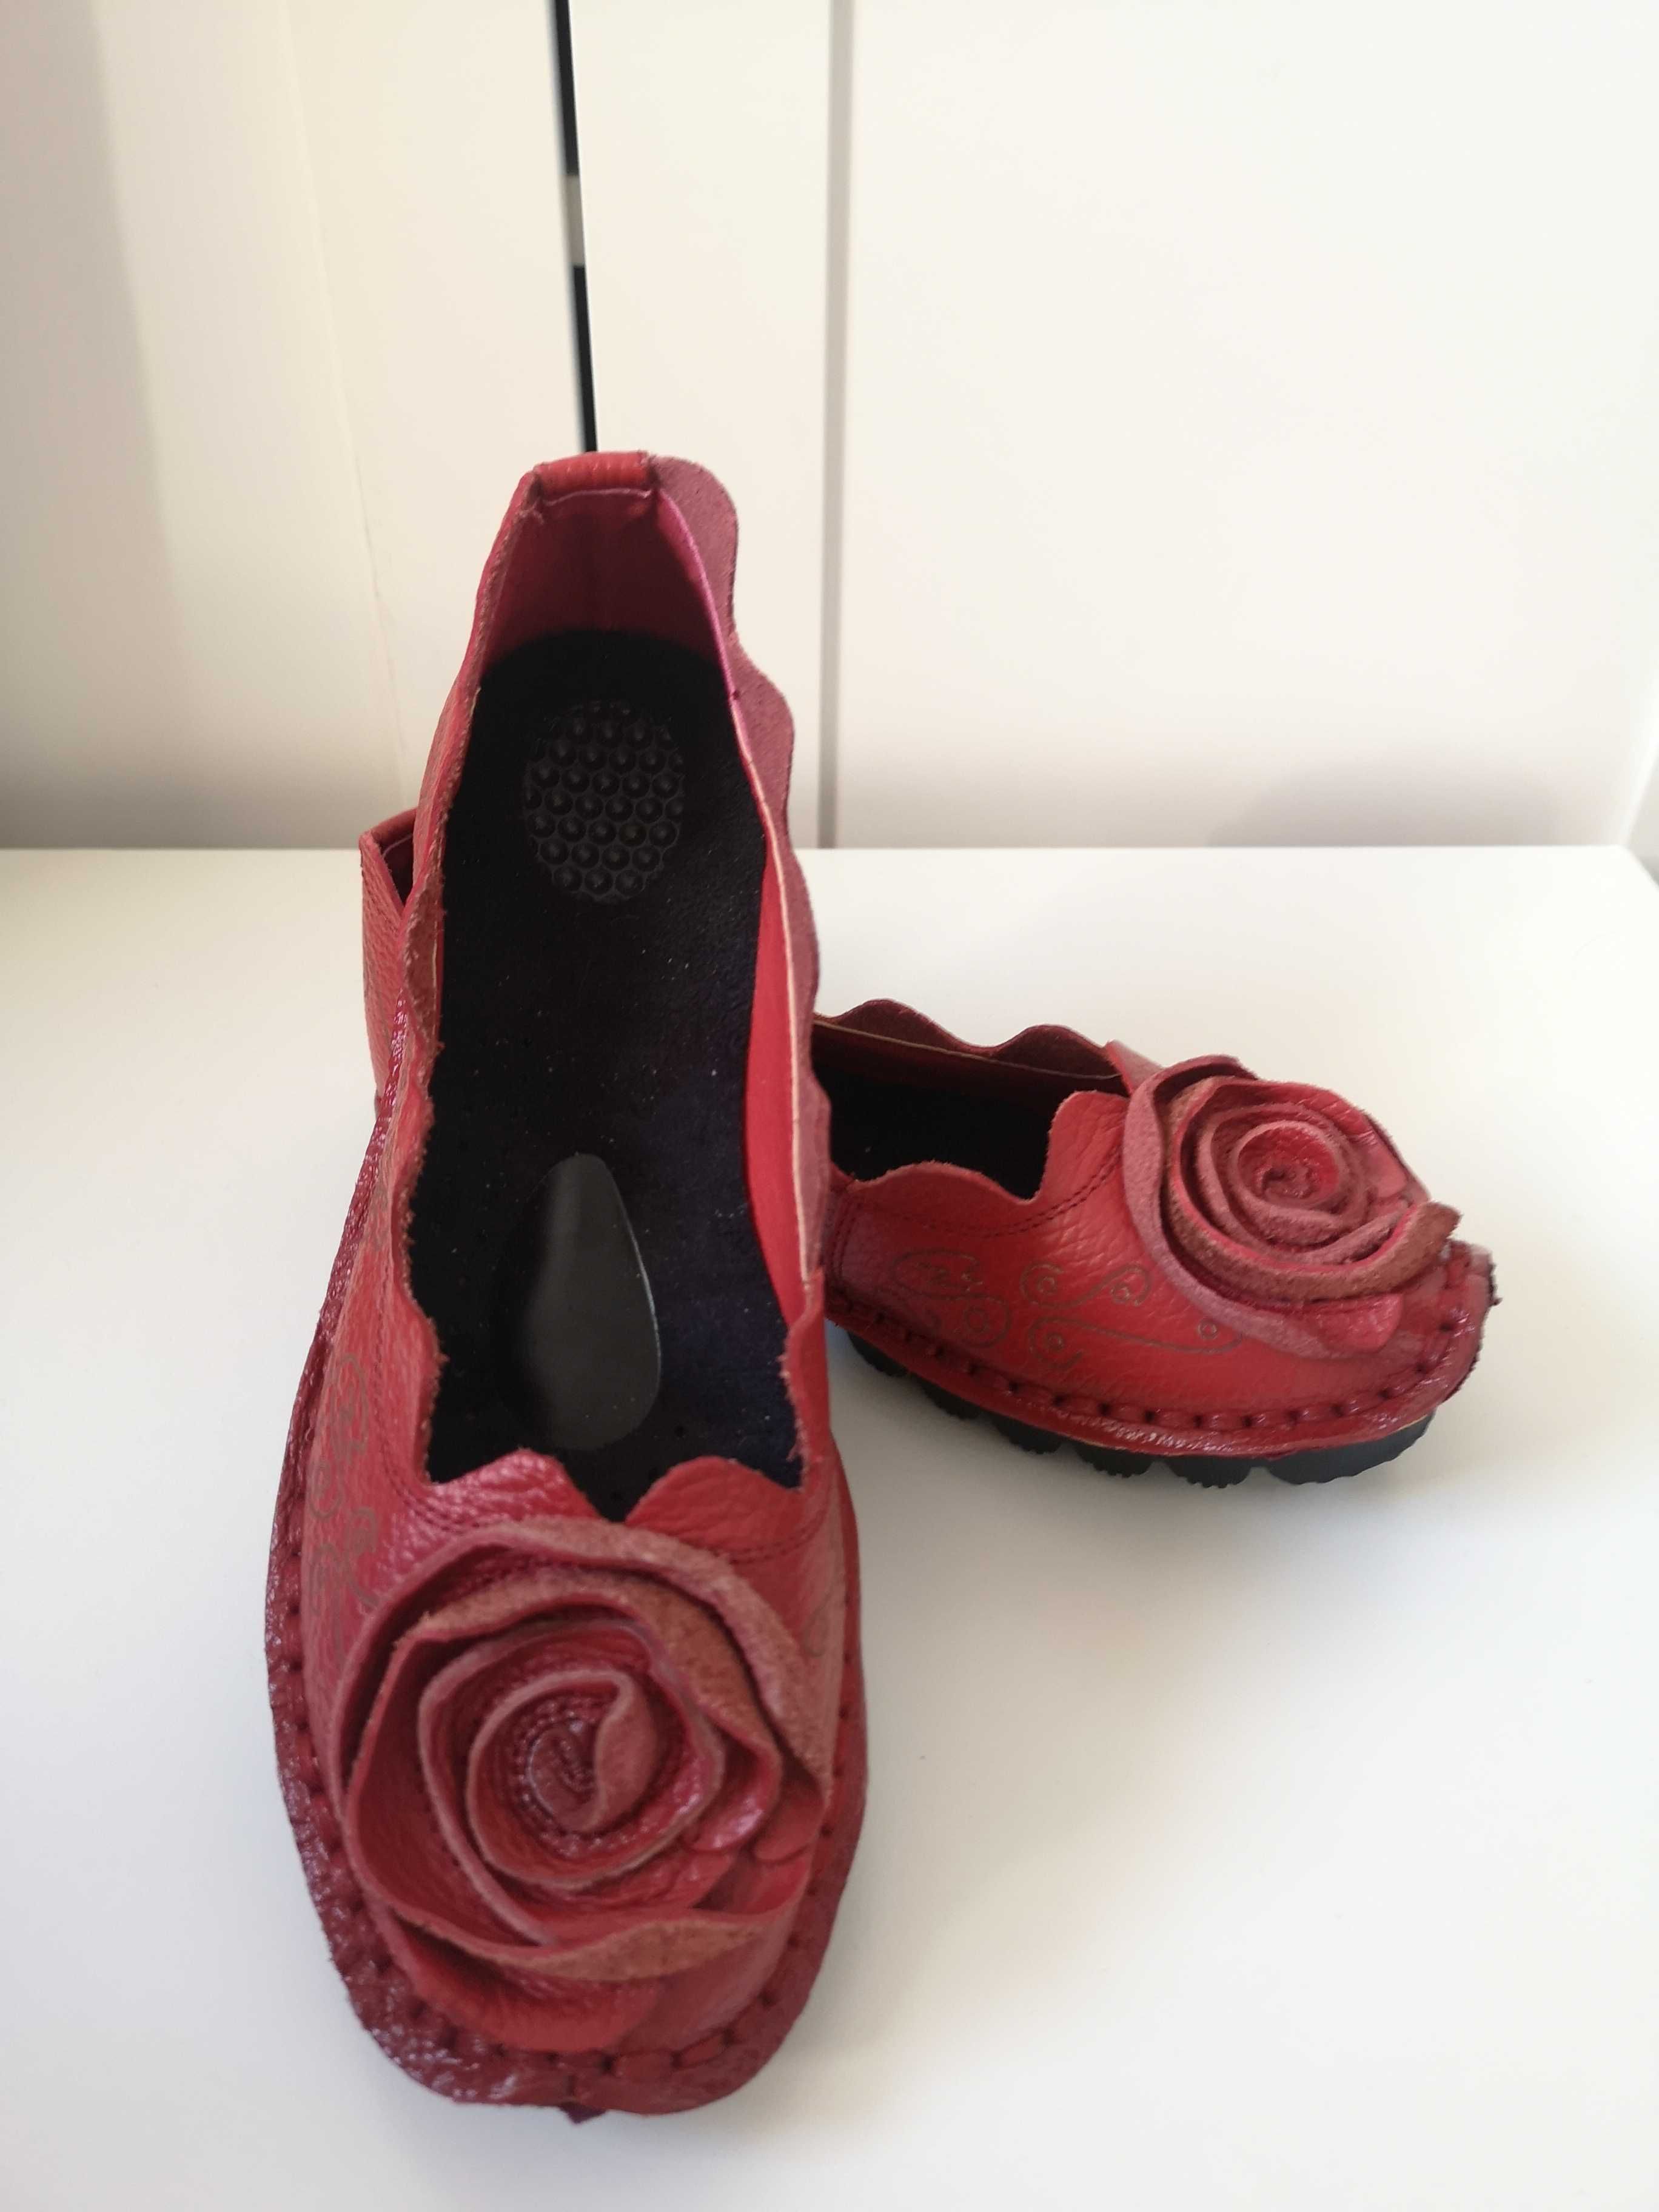 bio Rui czerwone buty ze skóry r. 37/38 (245)